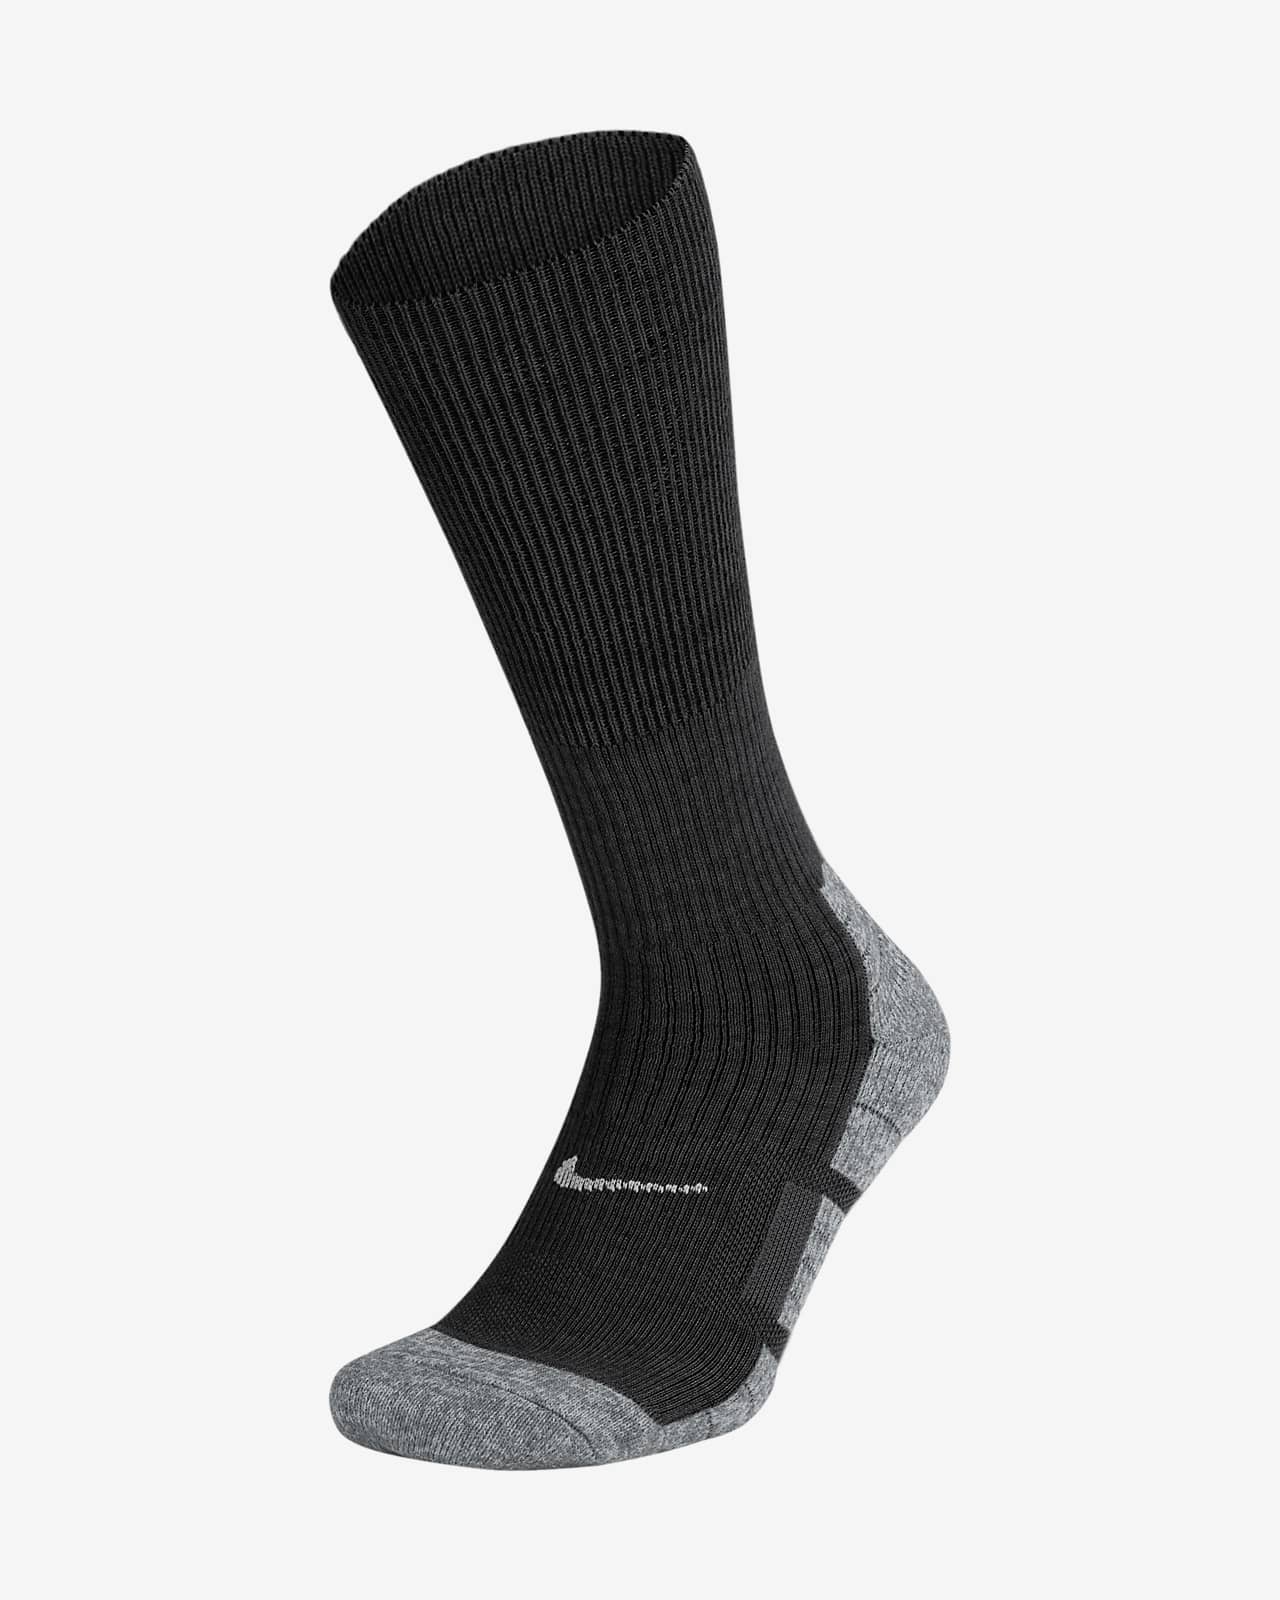 Nike Special Field Socks . Nike.com